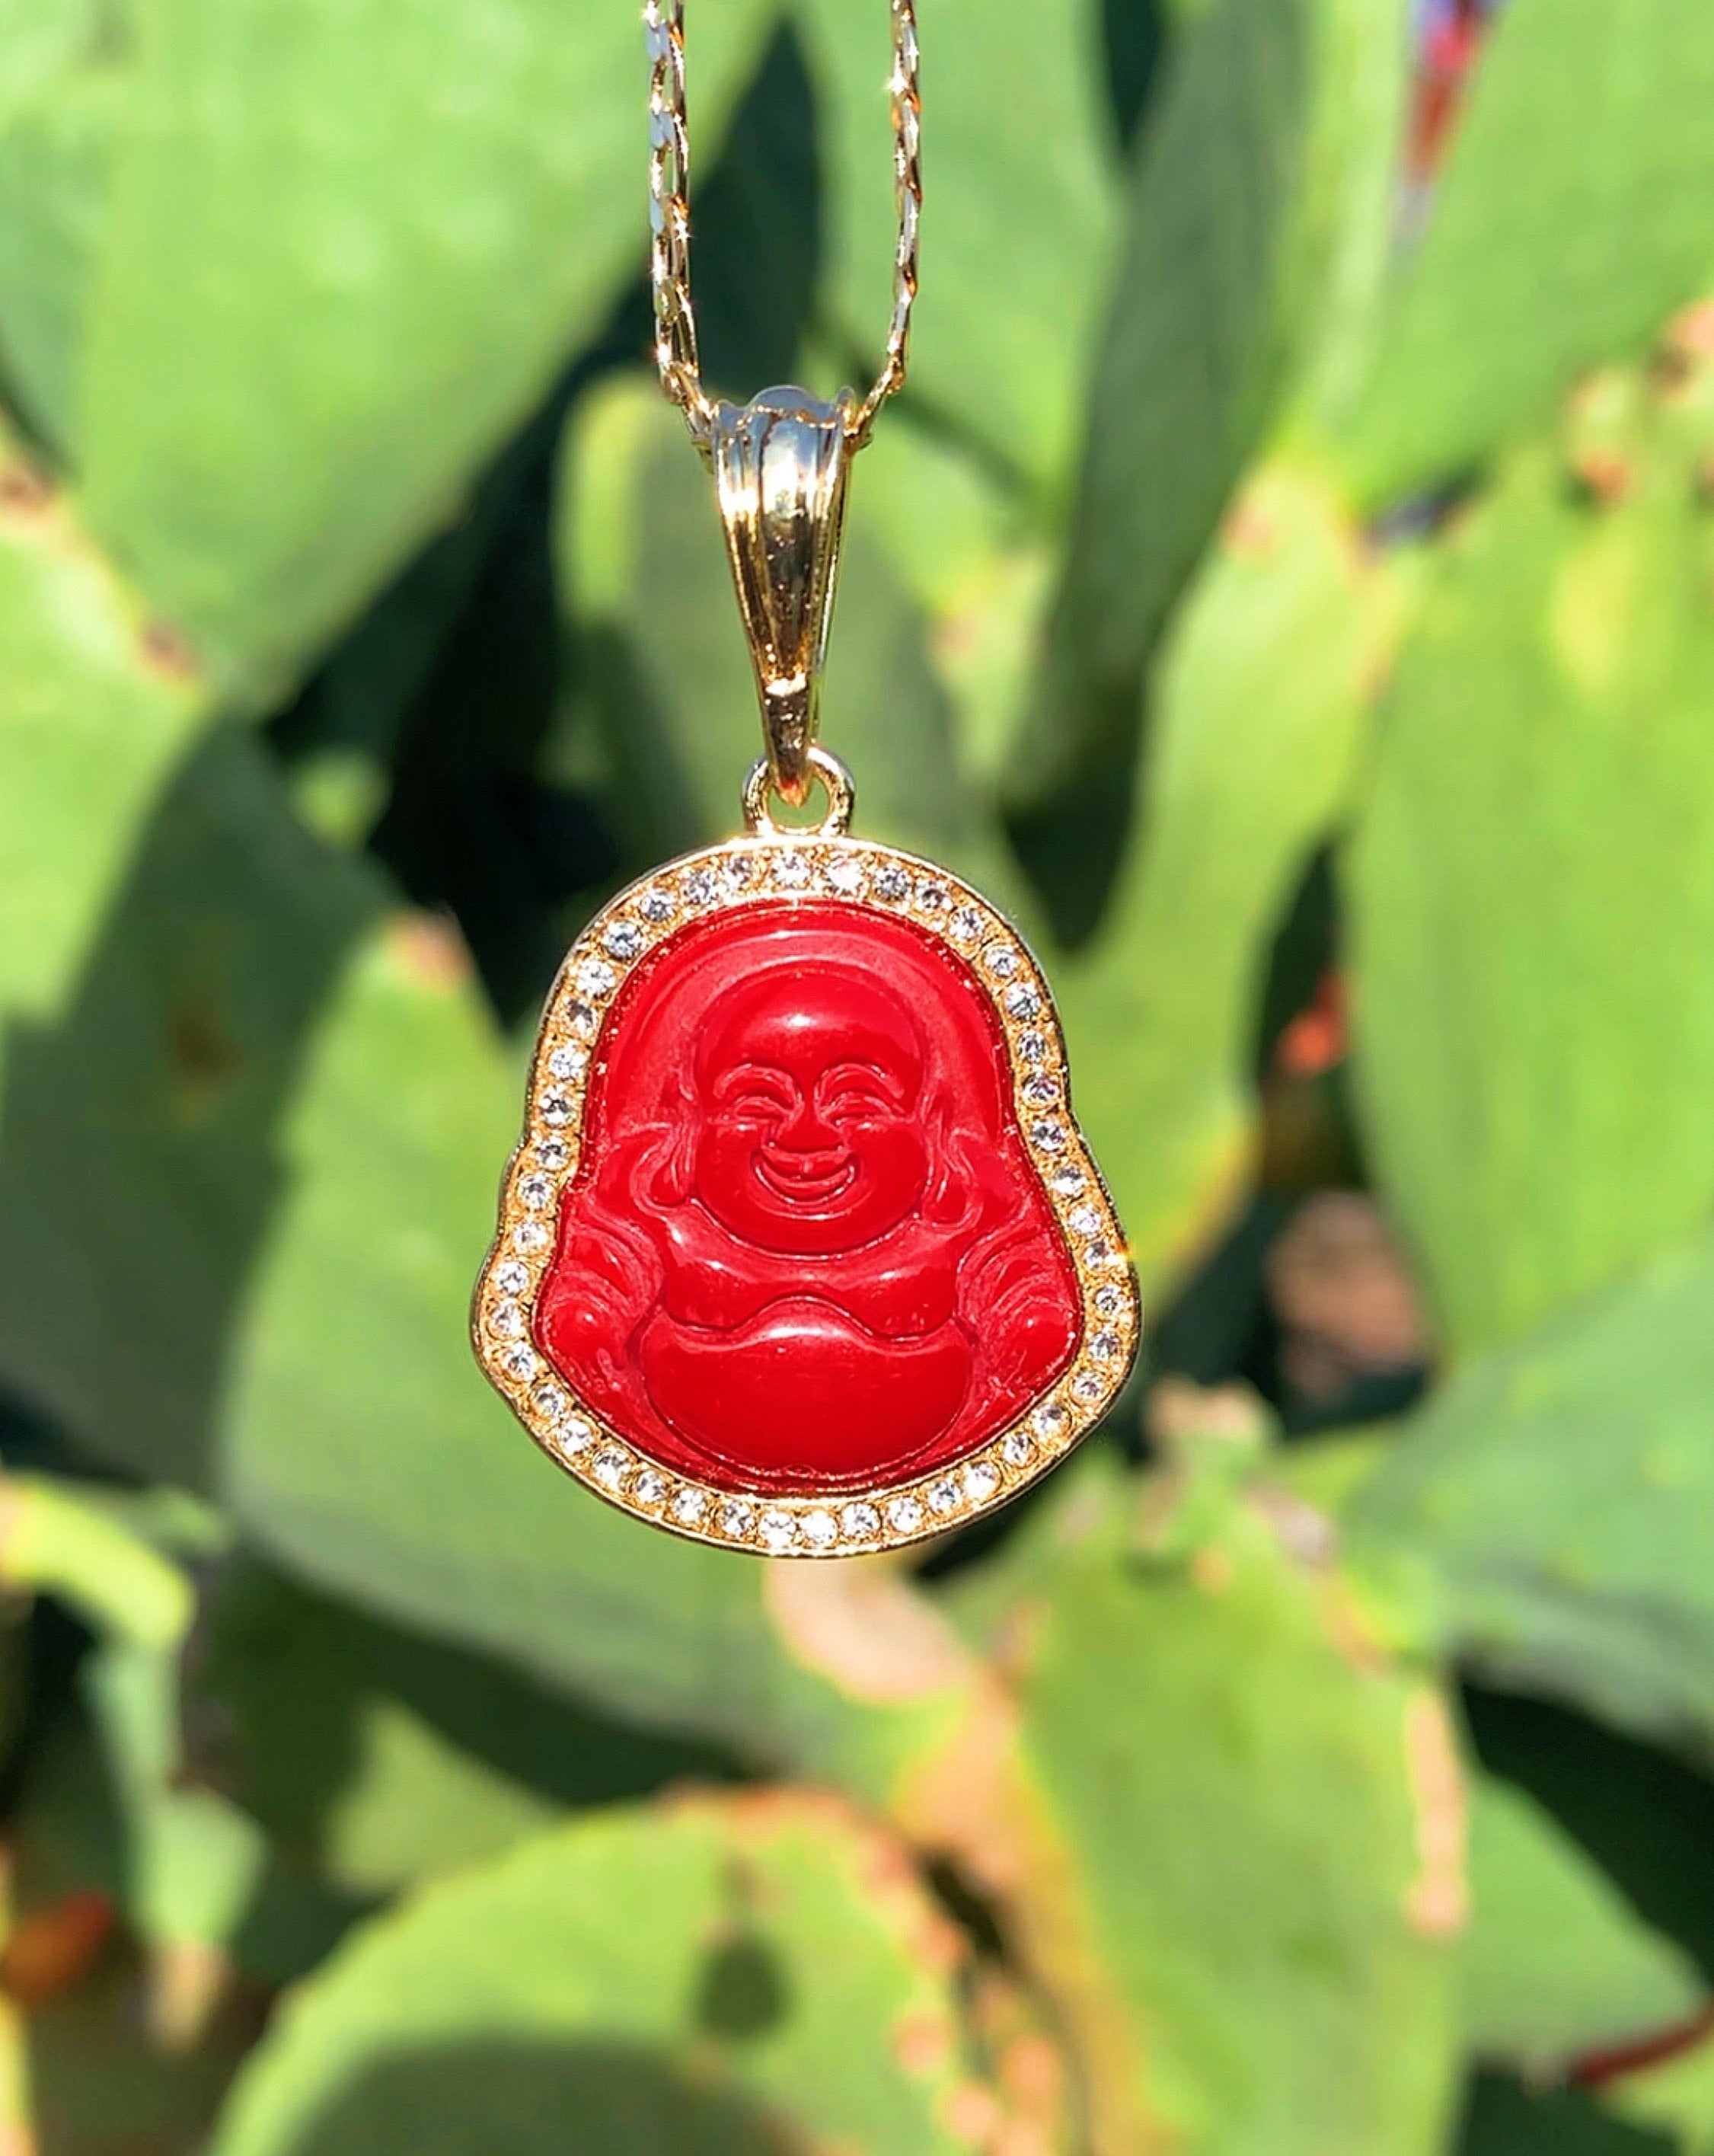 The Fiery Red Buddha